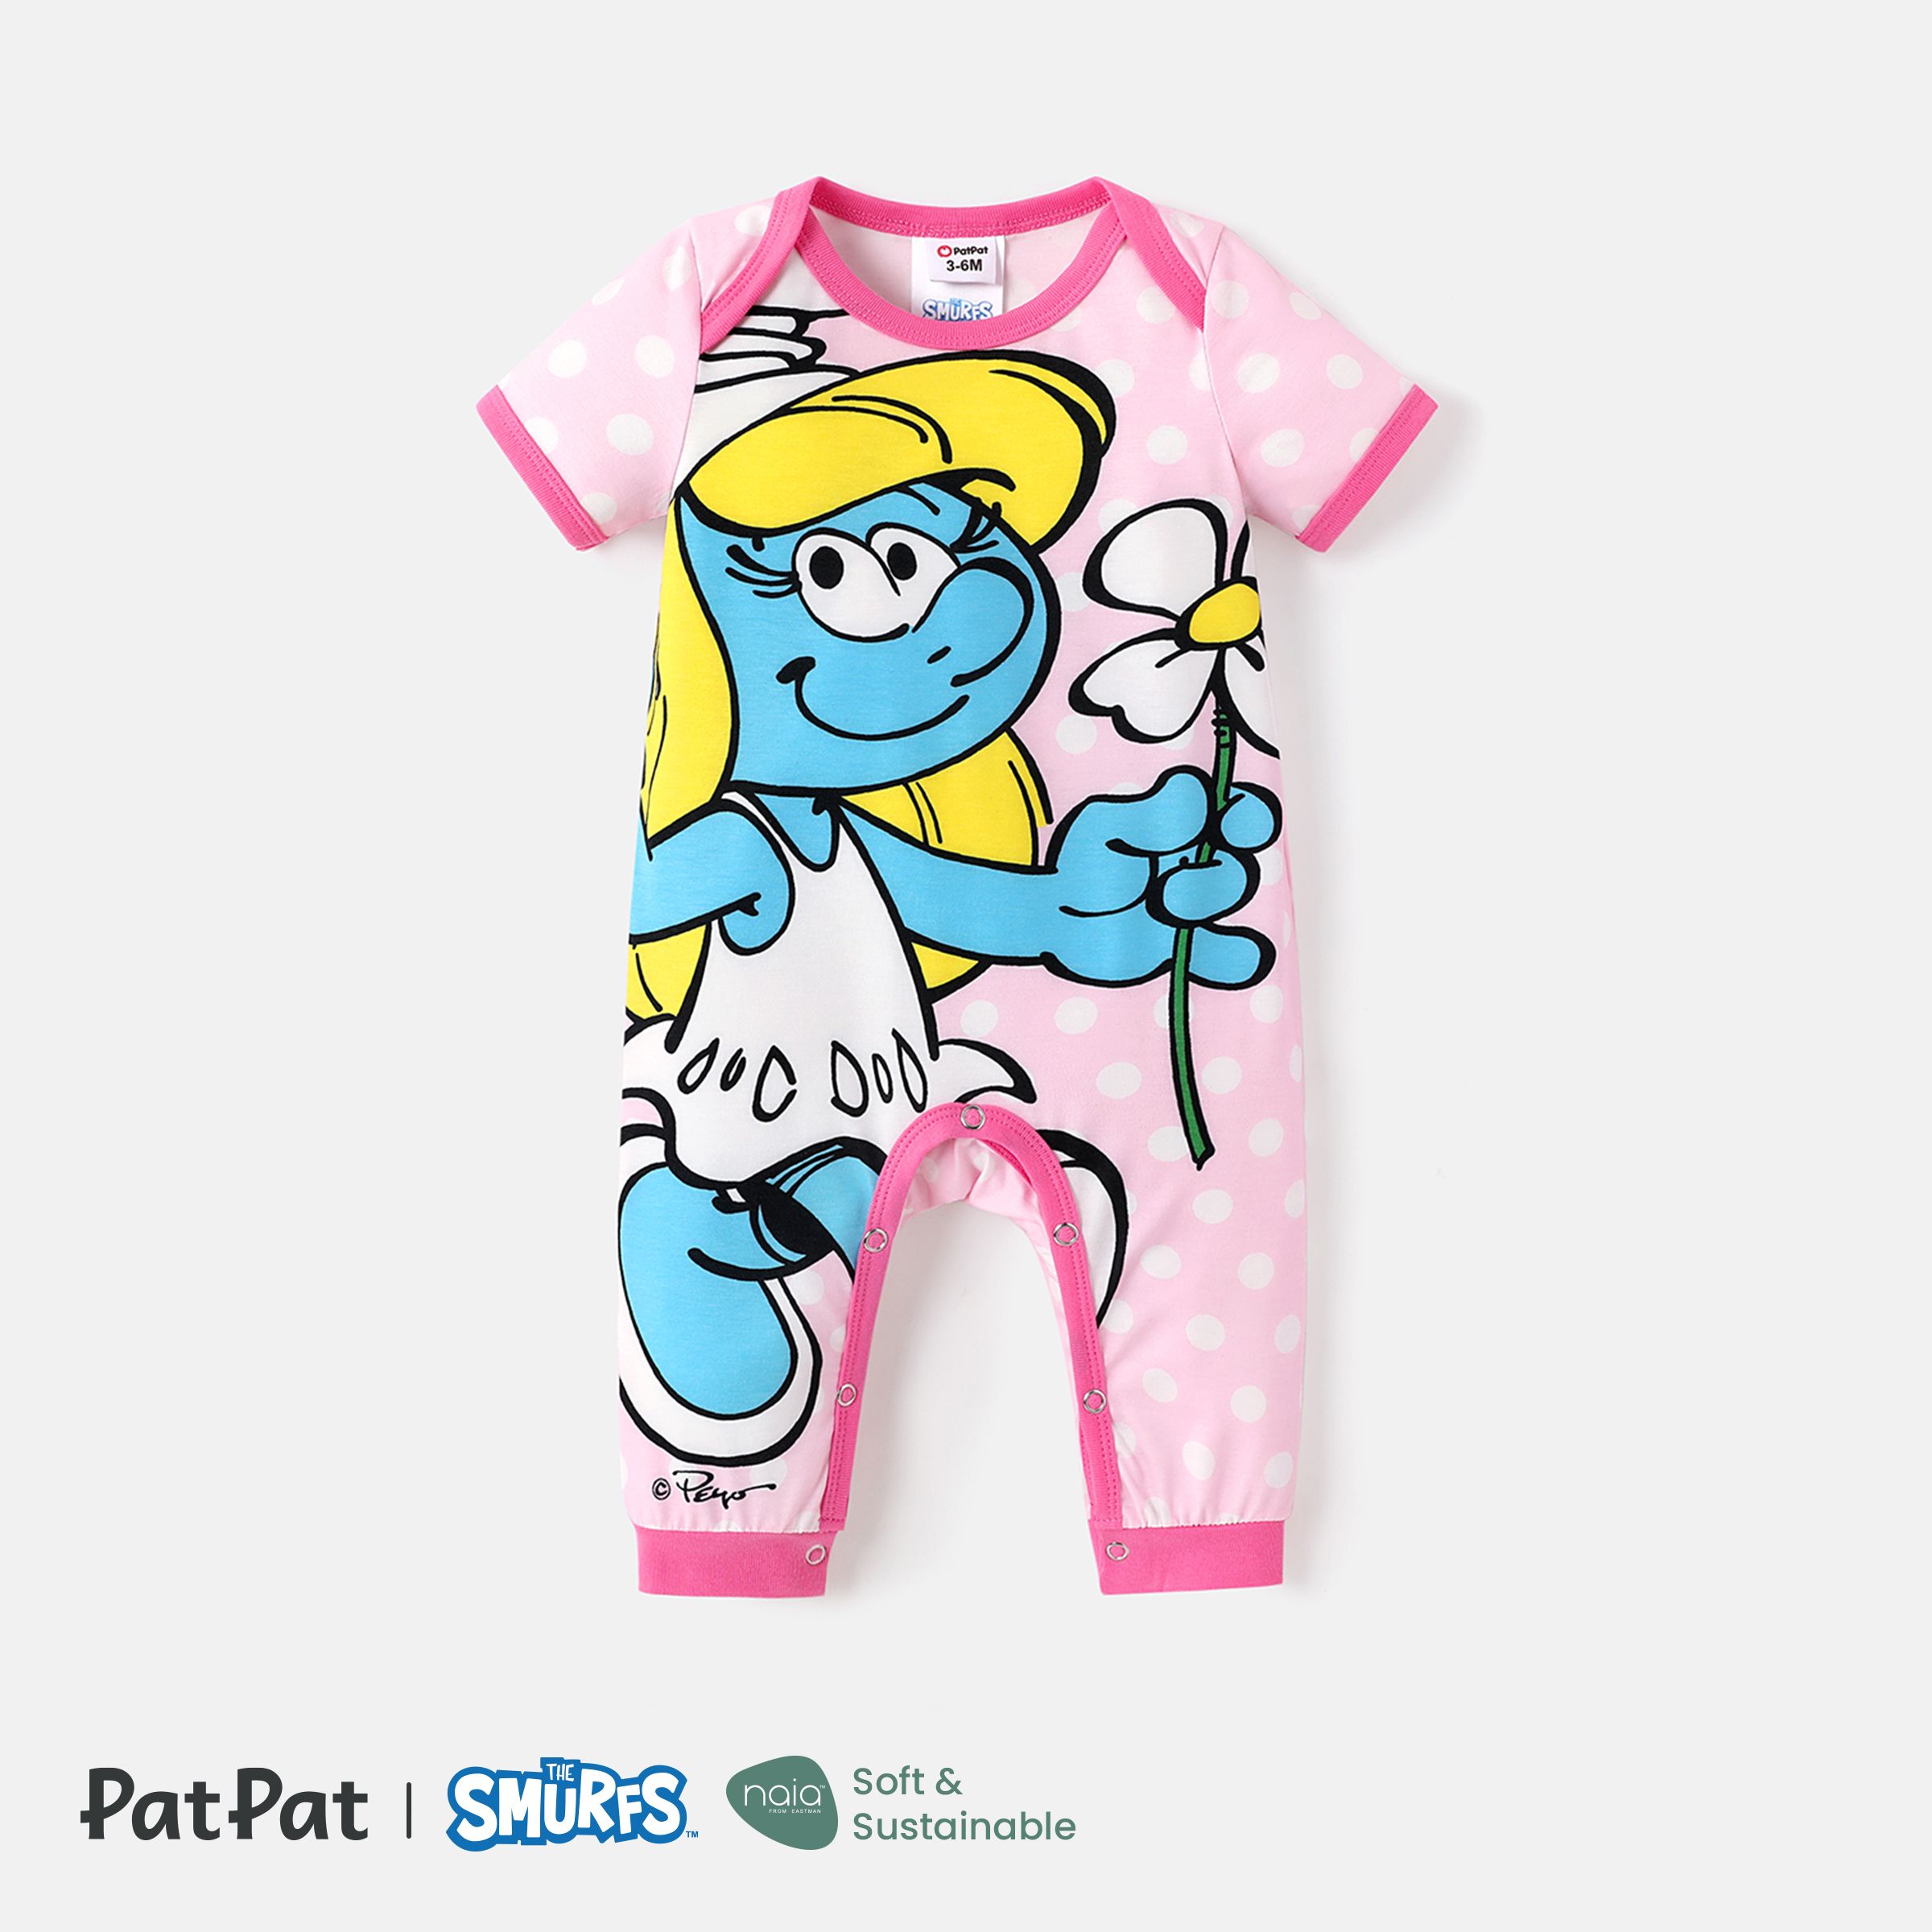 The Smurfs Baby Boy/Girl Graphic Print Striped Short-sleeve Naiaâ¢ Jumpsuit